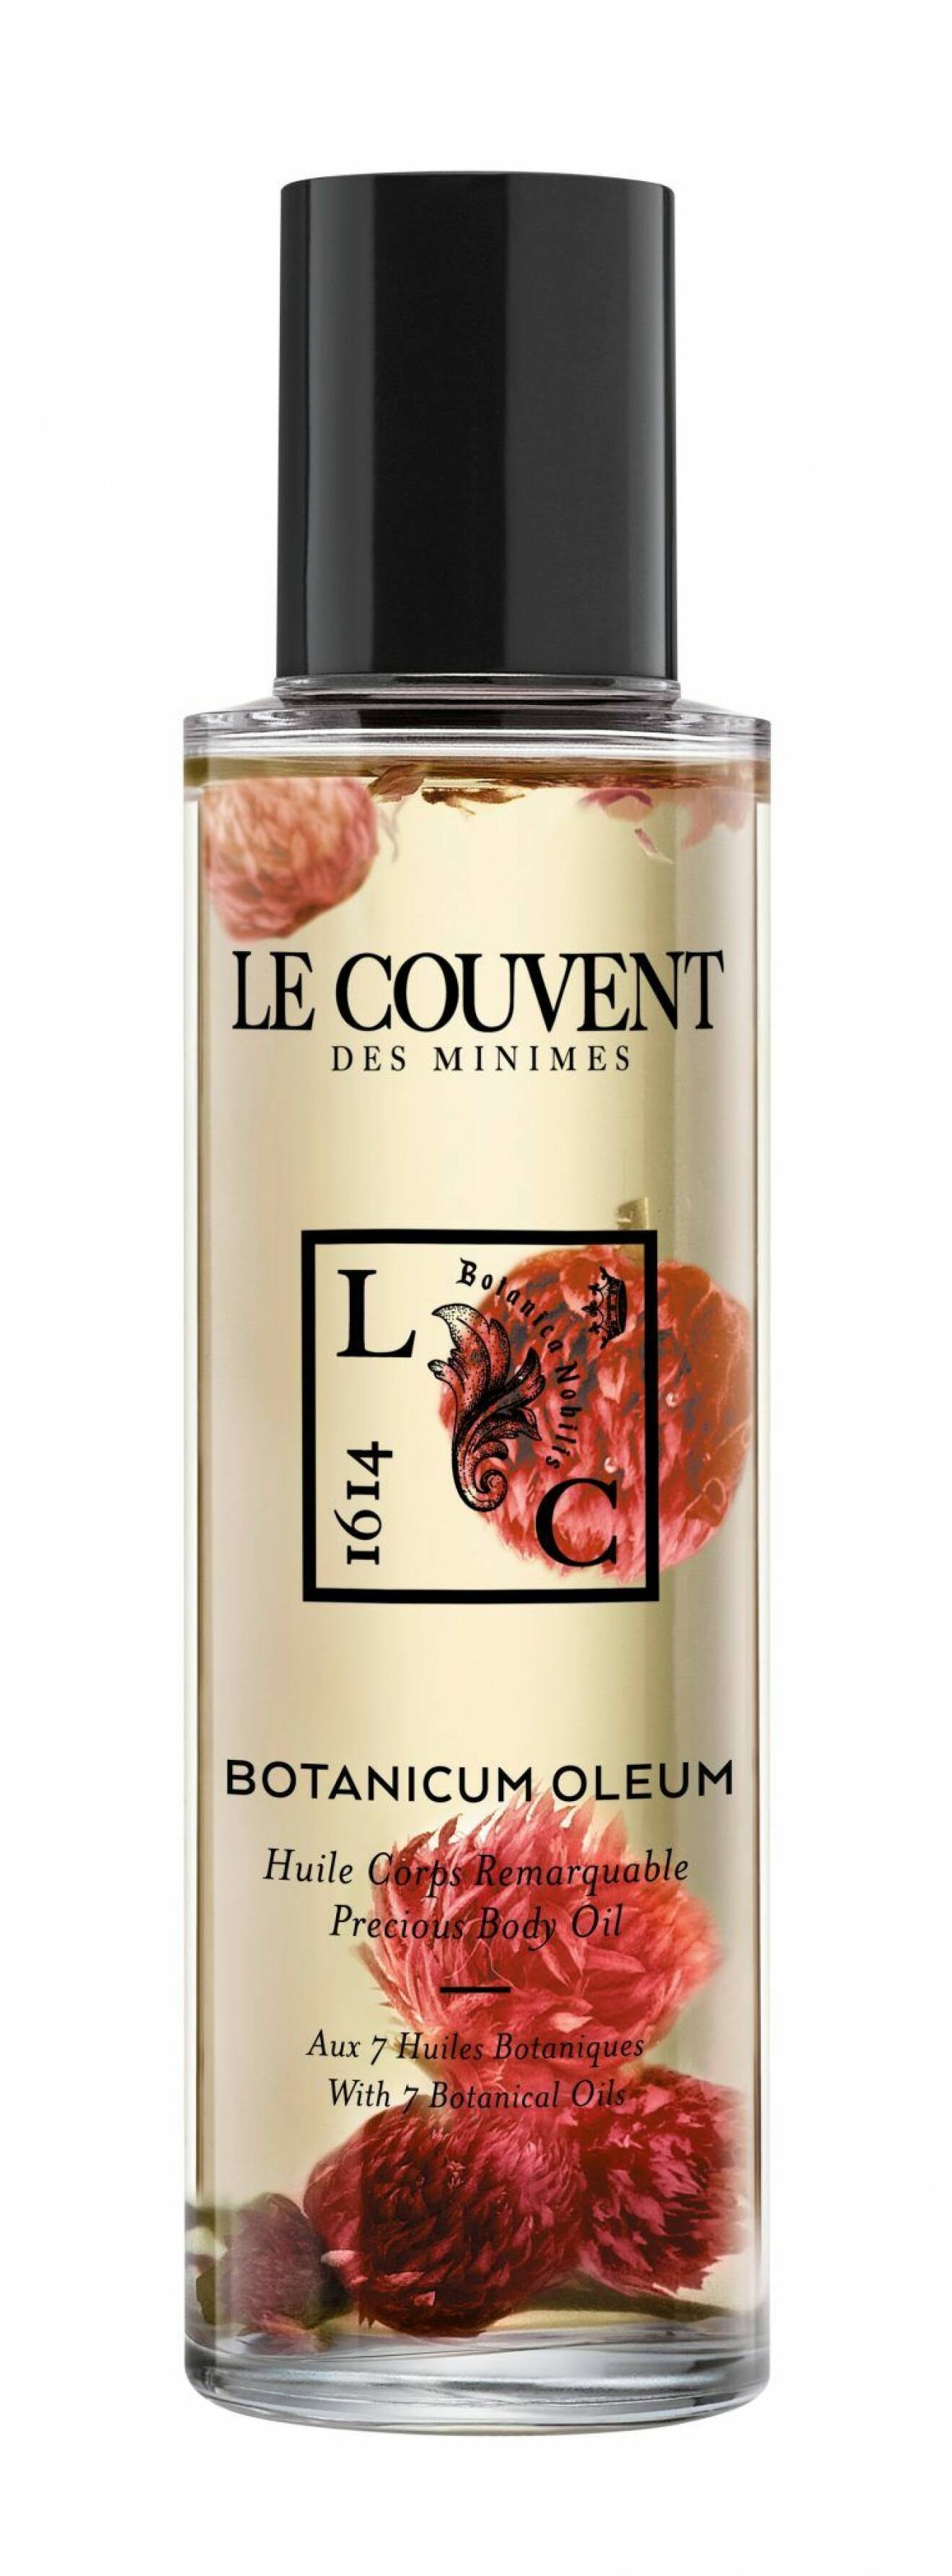 Botanical oleum olja från Le Couvent